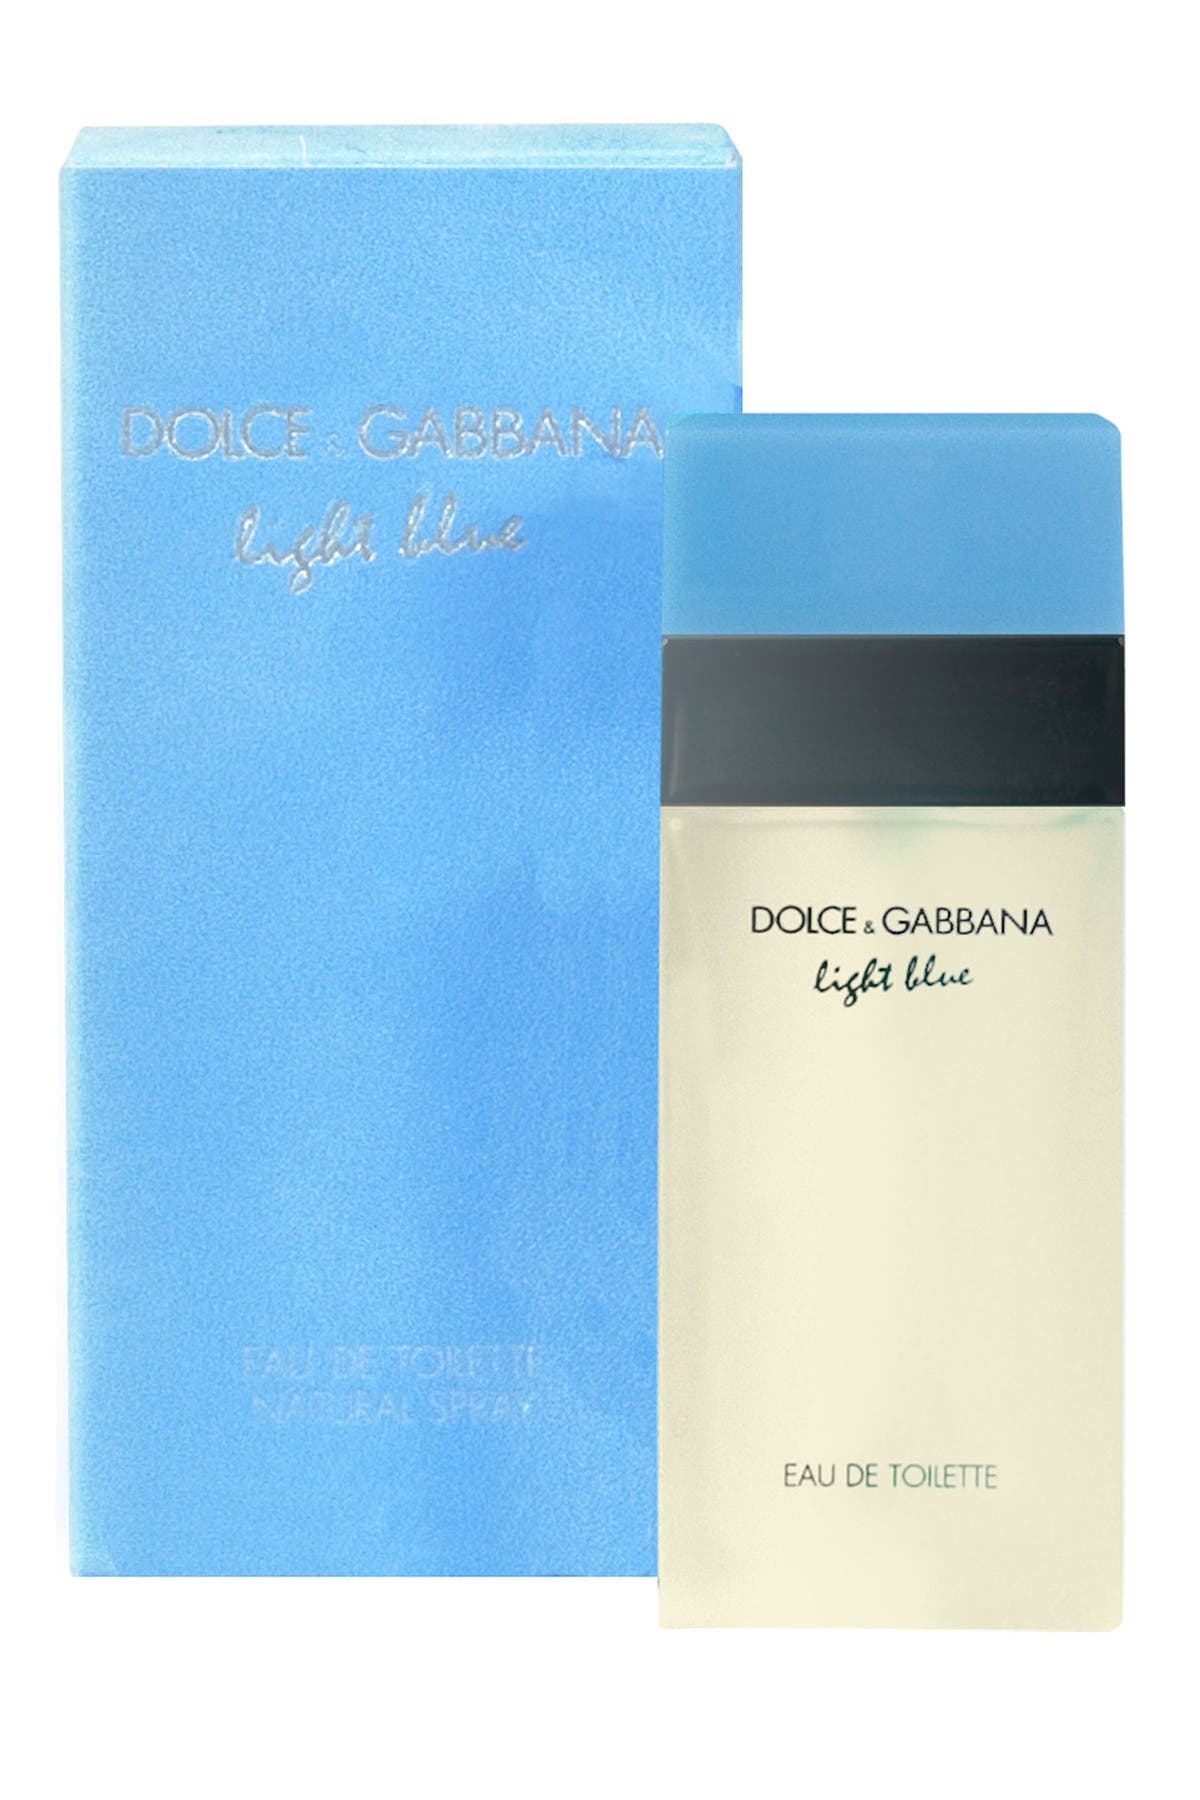 dolce and gabbana light blue 1.6